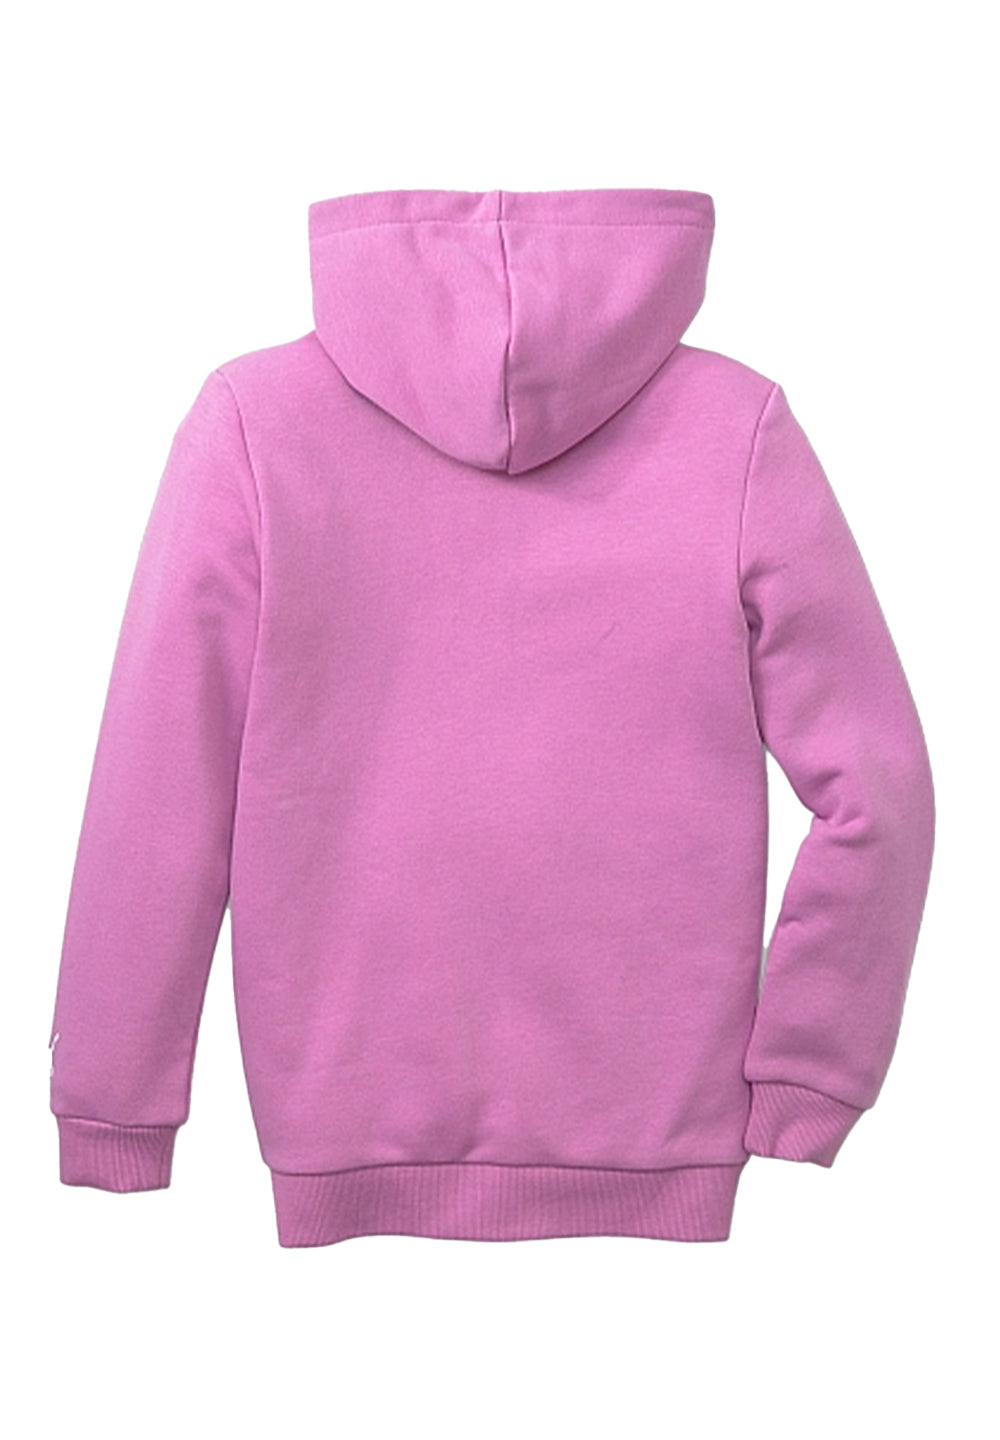 Felpa zip con cappuccio rosa per bambina